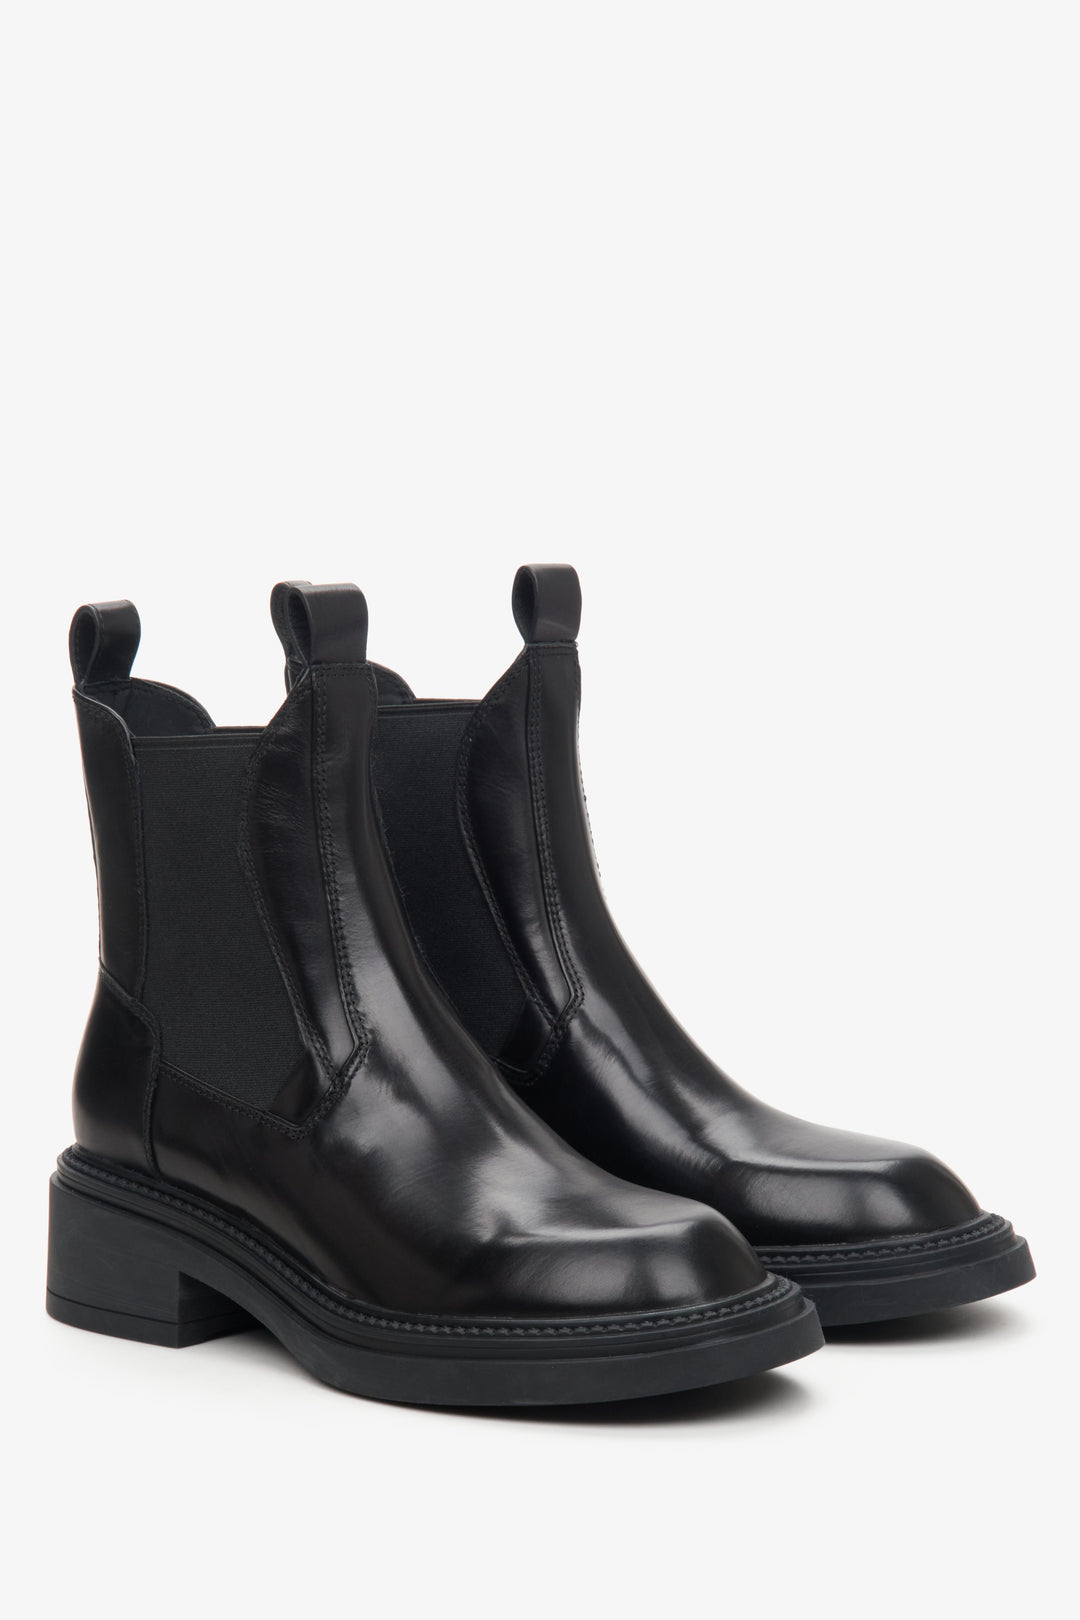 Women's black leather Chelsea boots Estro.